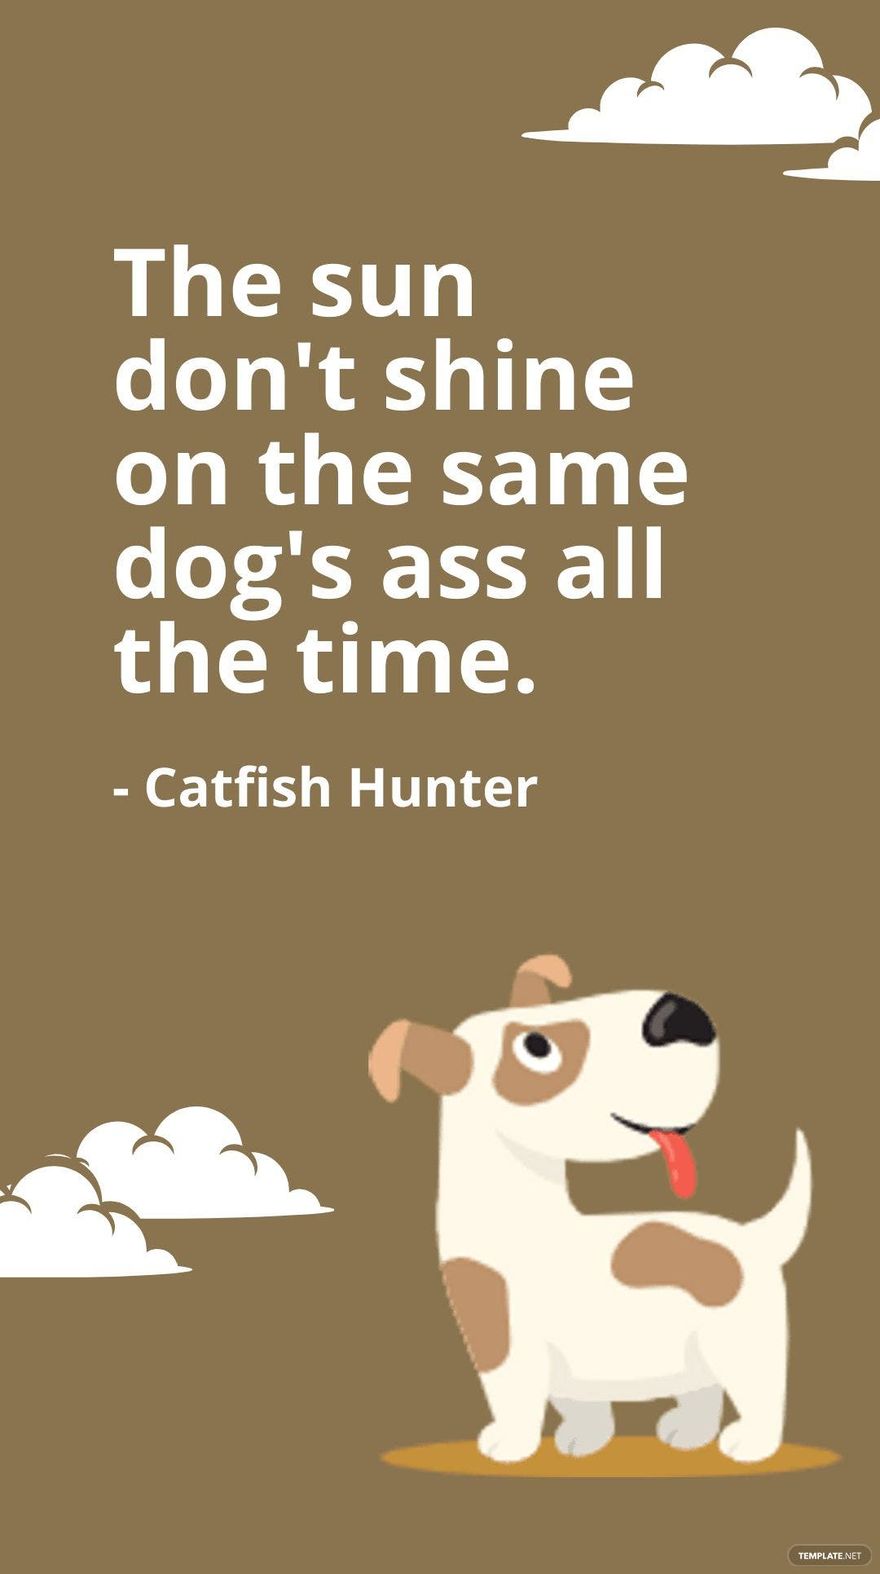 Catfish Hunter - The sun don't shine on the same dog's ass all the time. in JPG